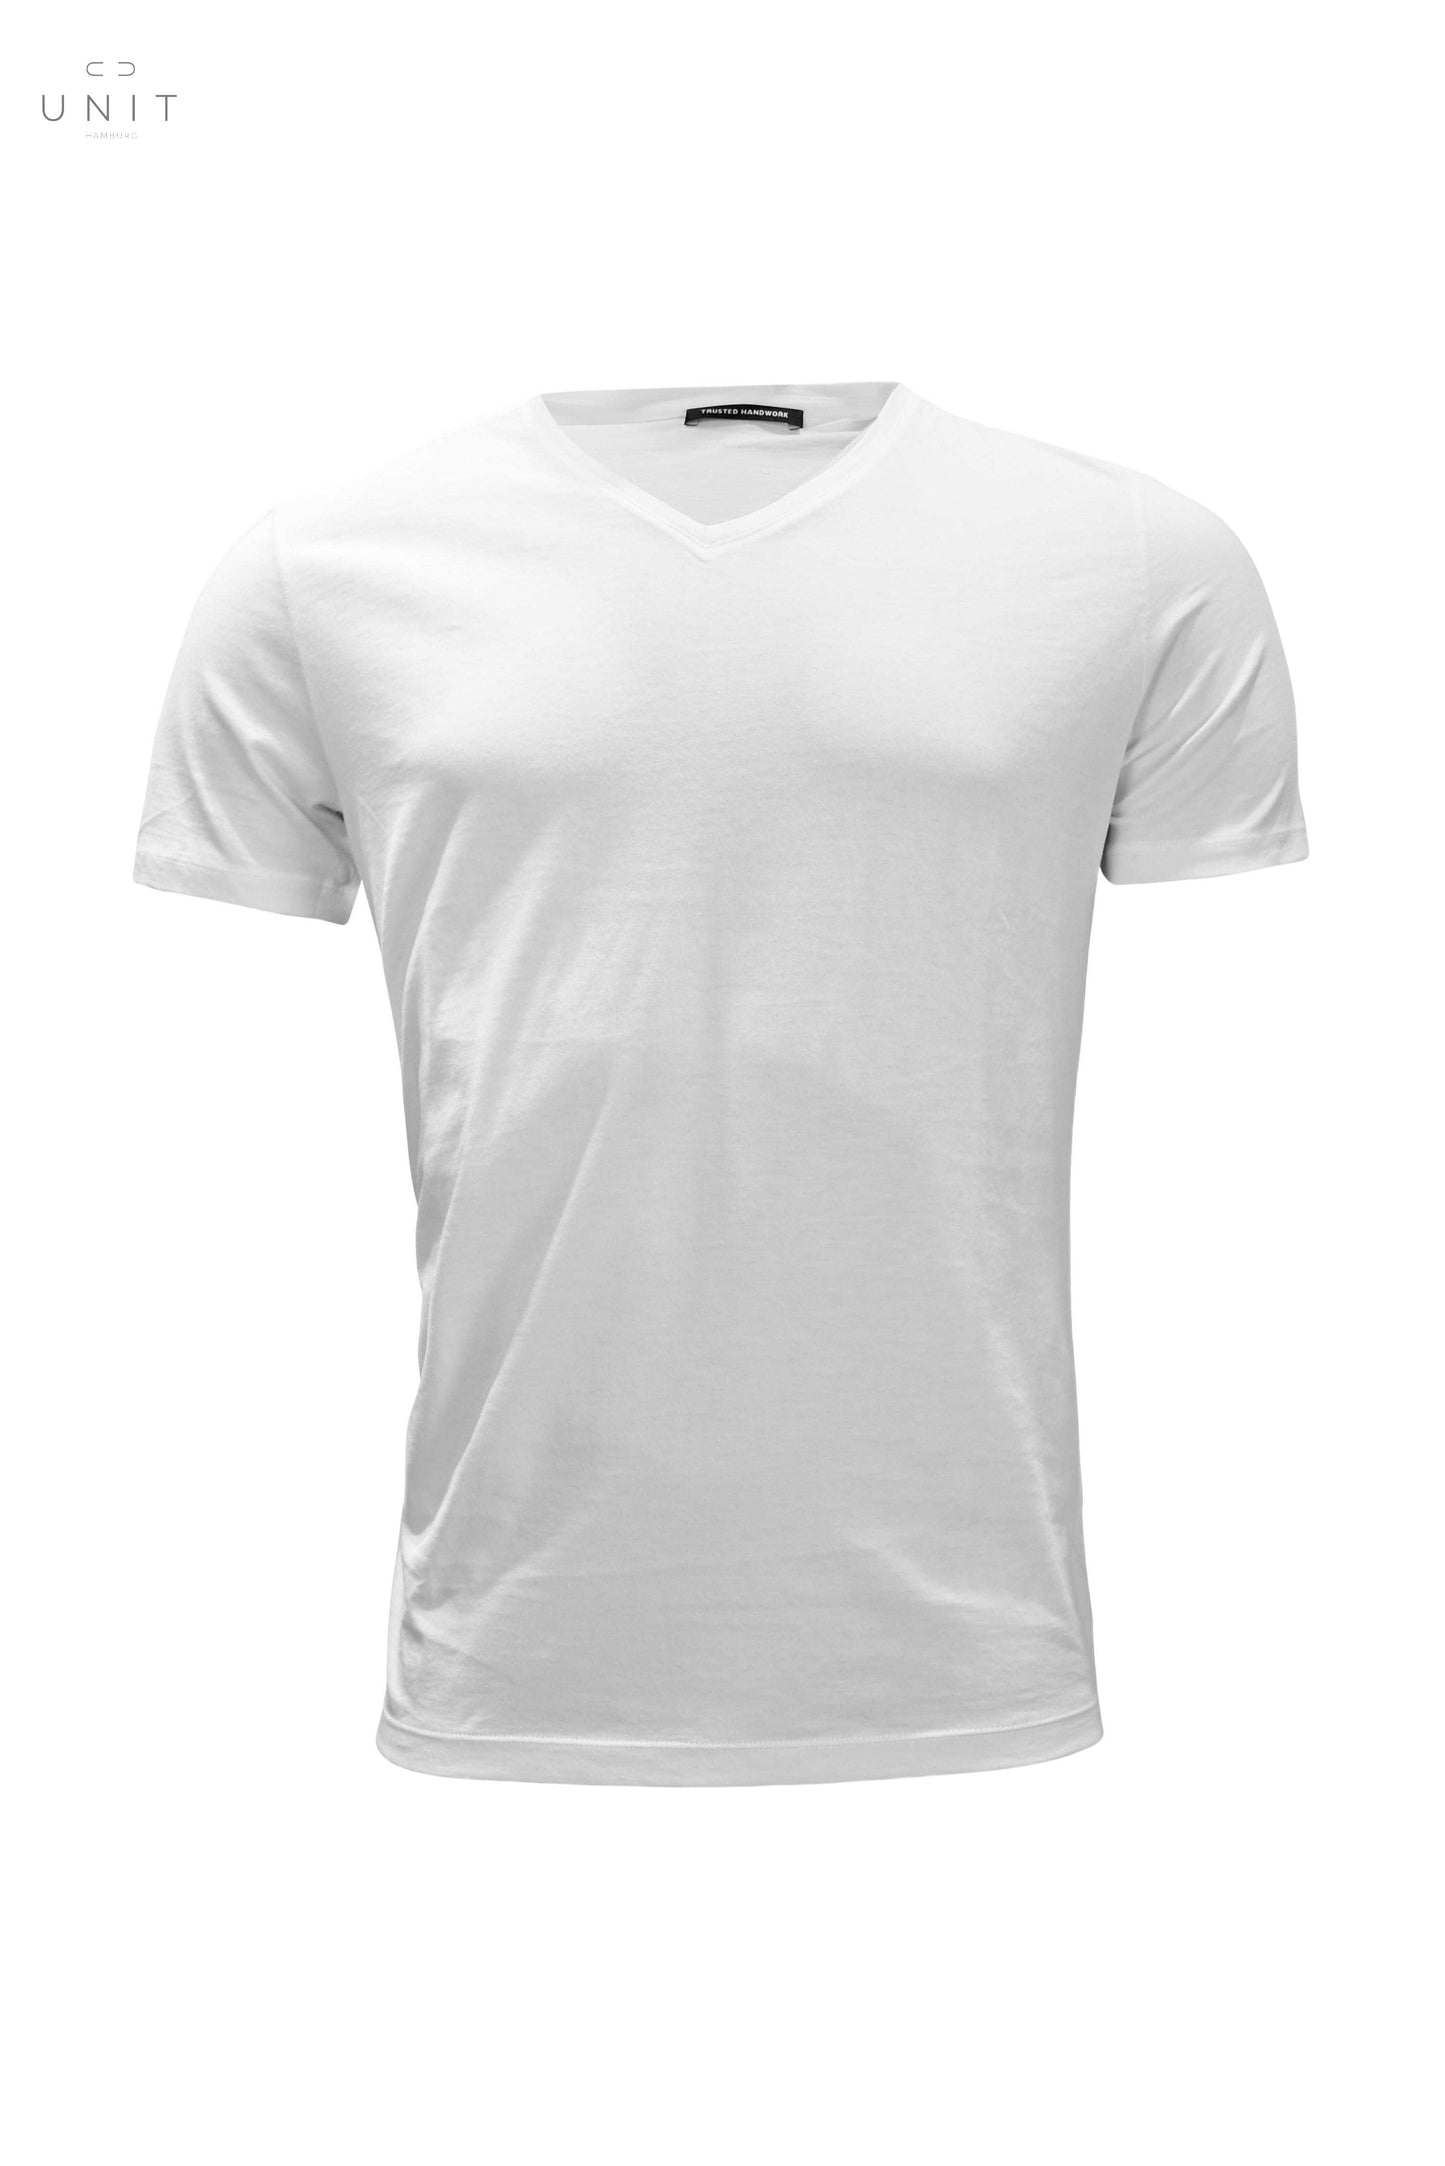 Trusted Handwork  v-neck 1/2 sleeve t-shirt - UNIT Hamburg